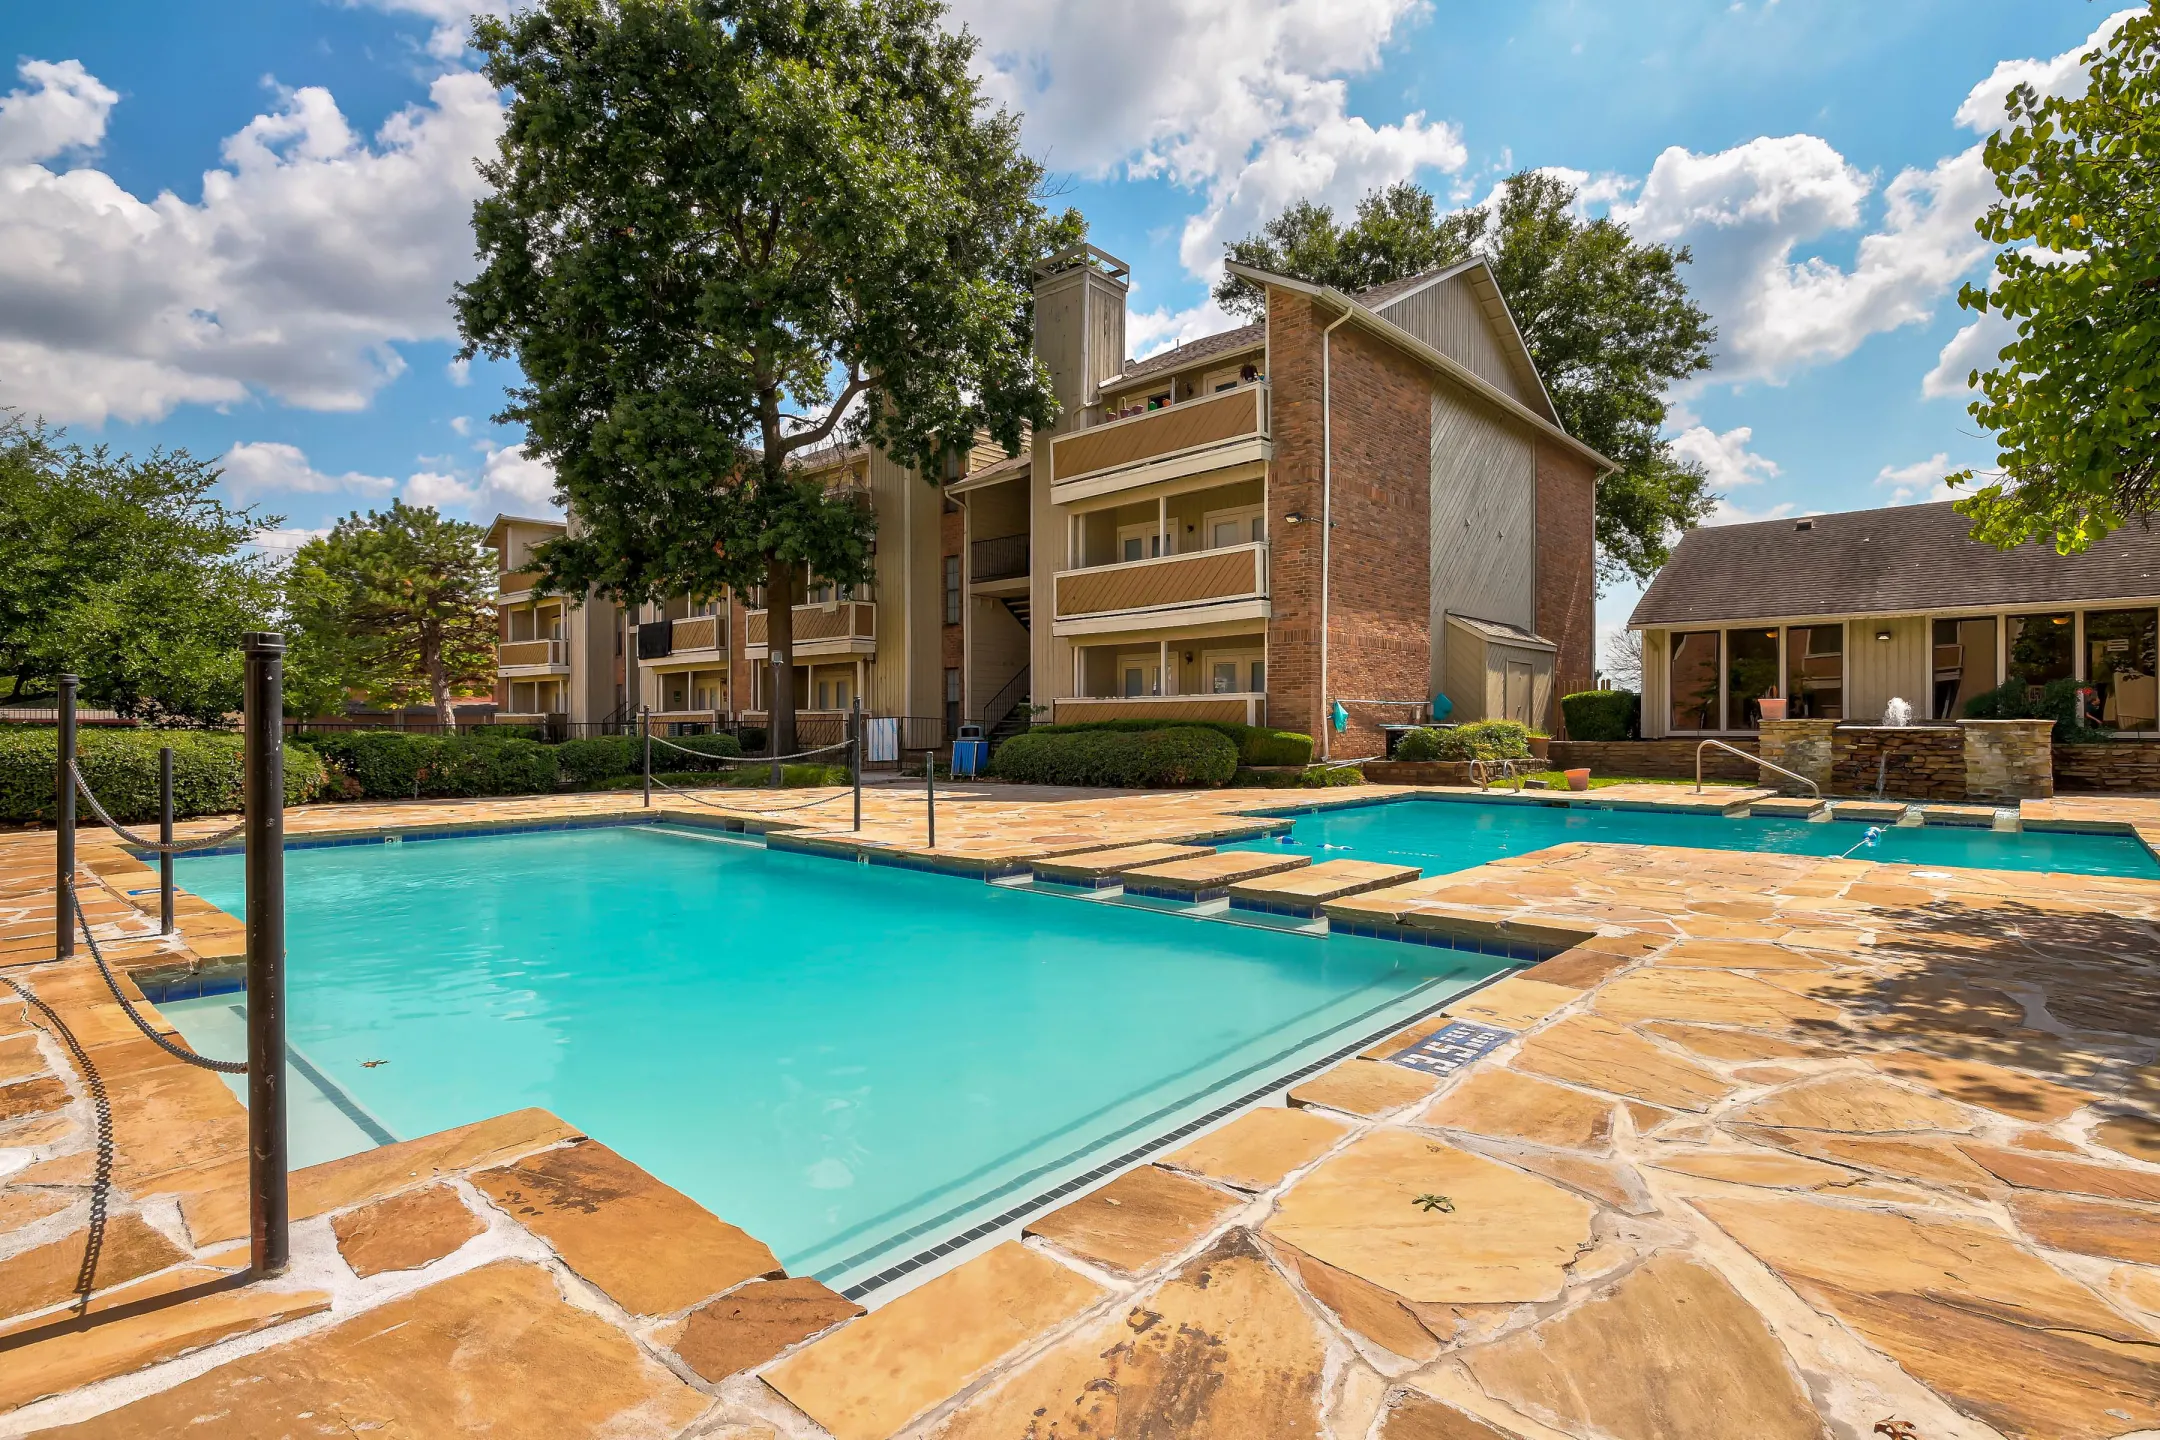 Pool - Lincoln Glens Apartments - Tulsa, OK